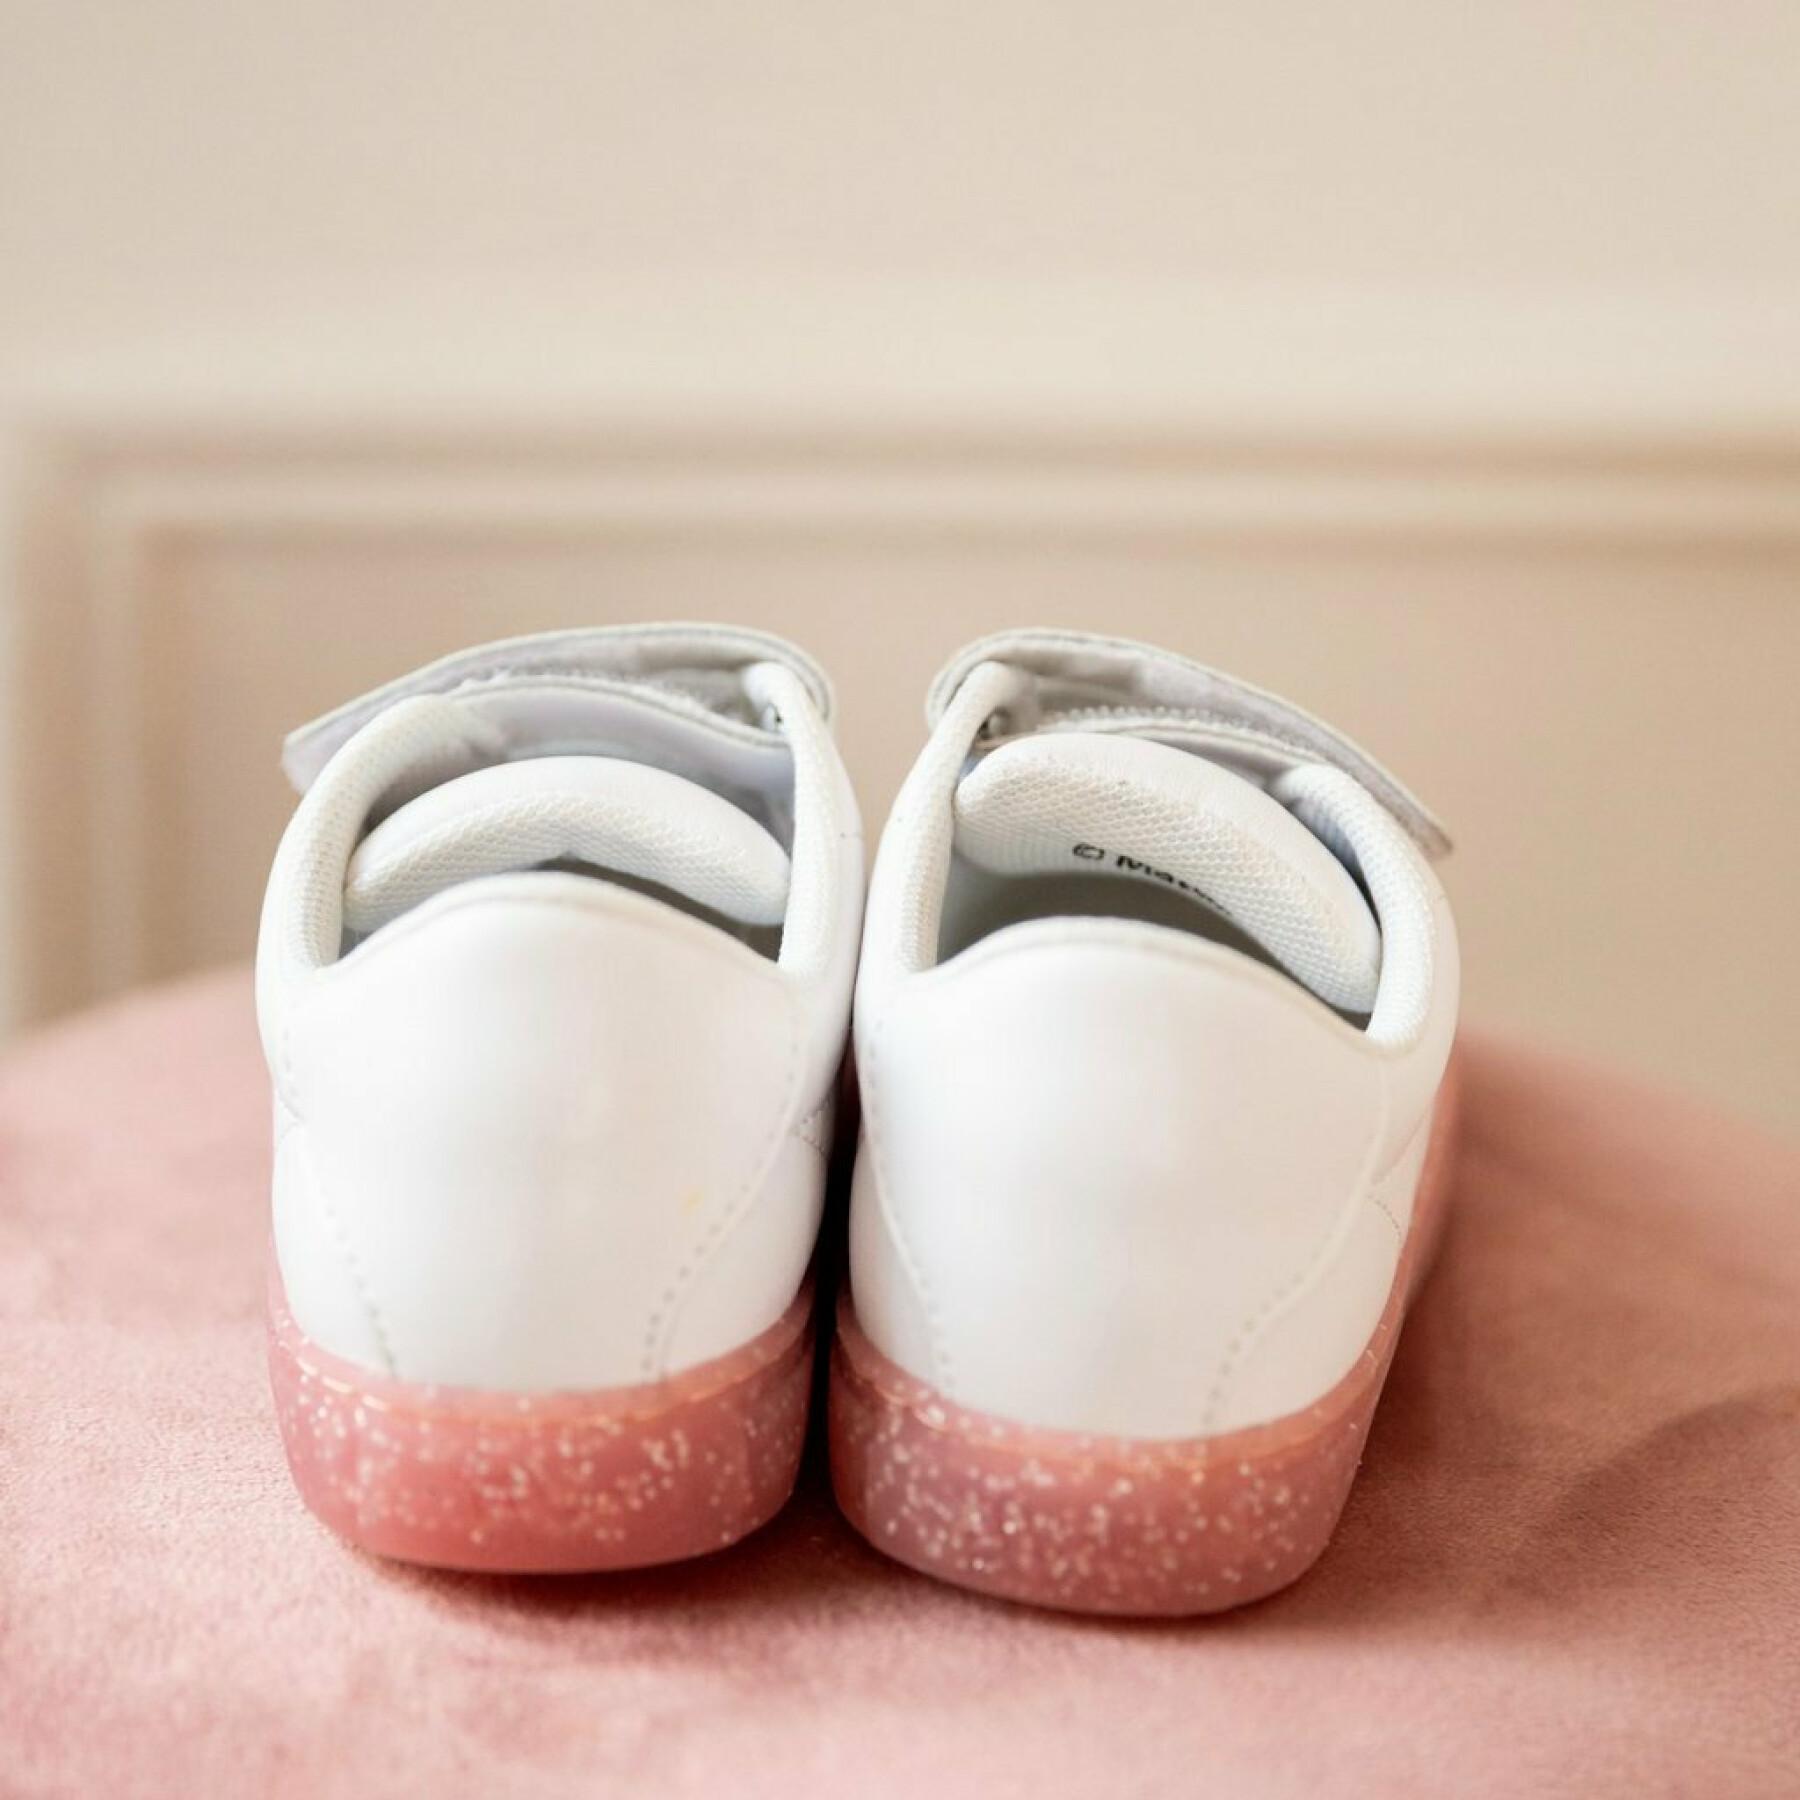 Zapatillas de deporte para chicas Bons Baisers de Paname Mini Edith Barbie-Glitter